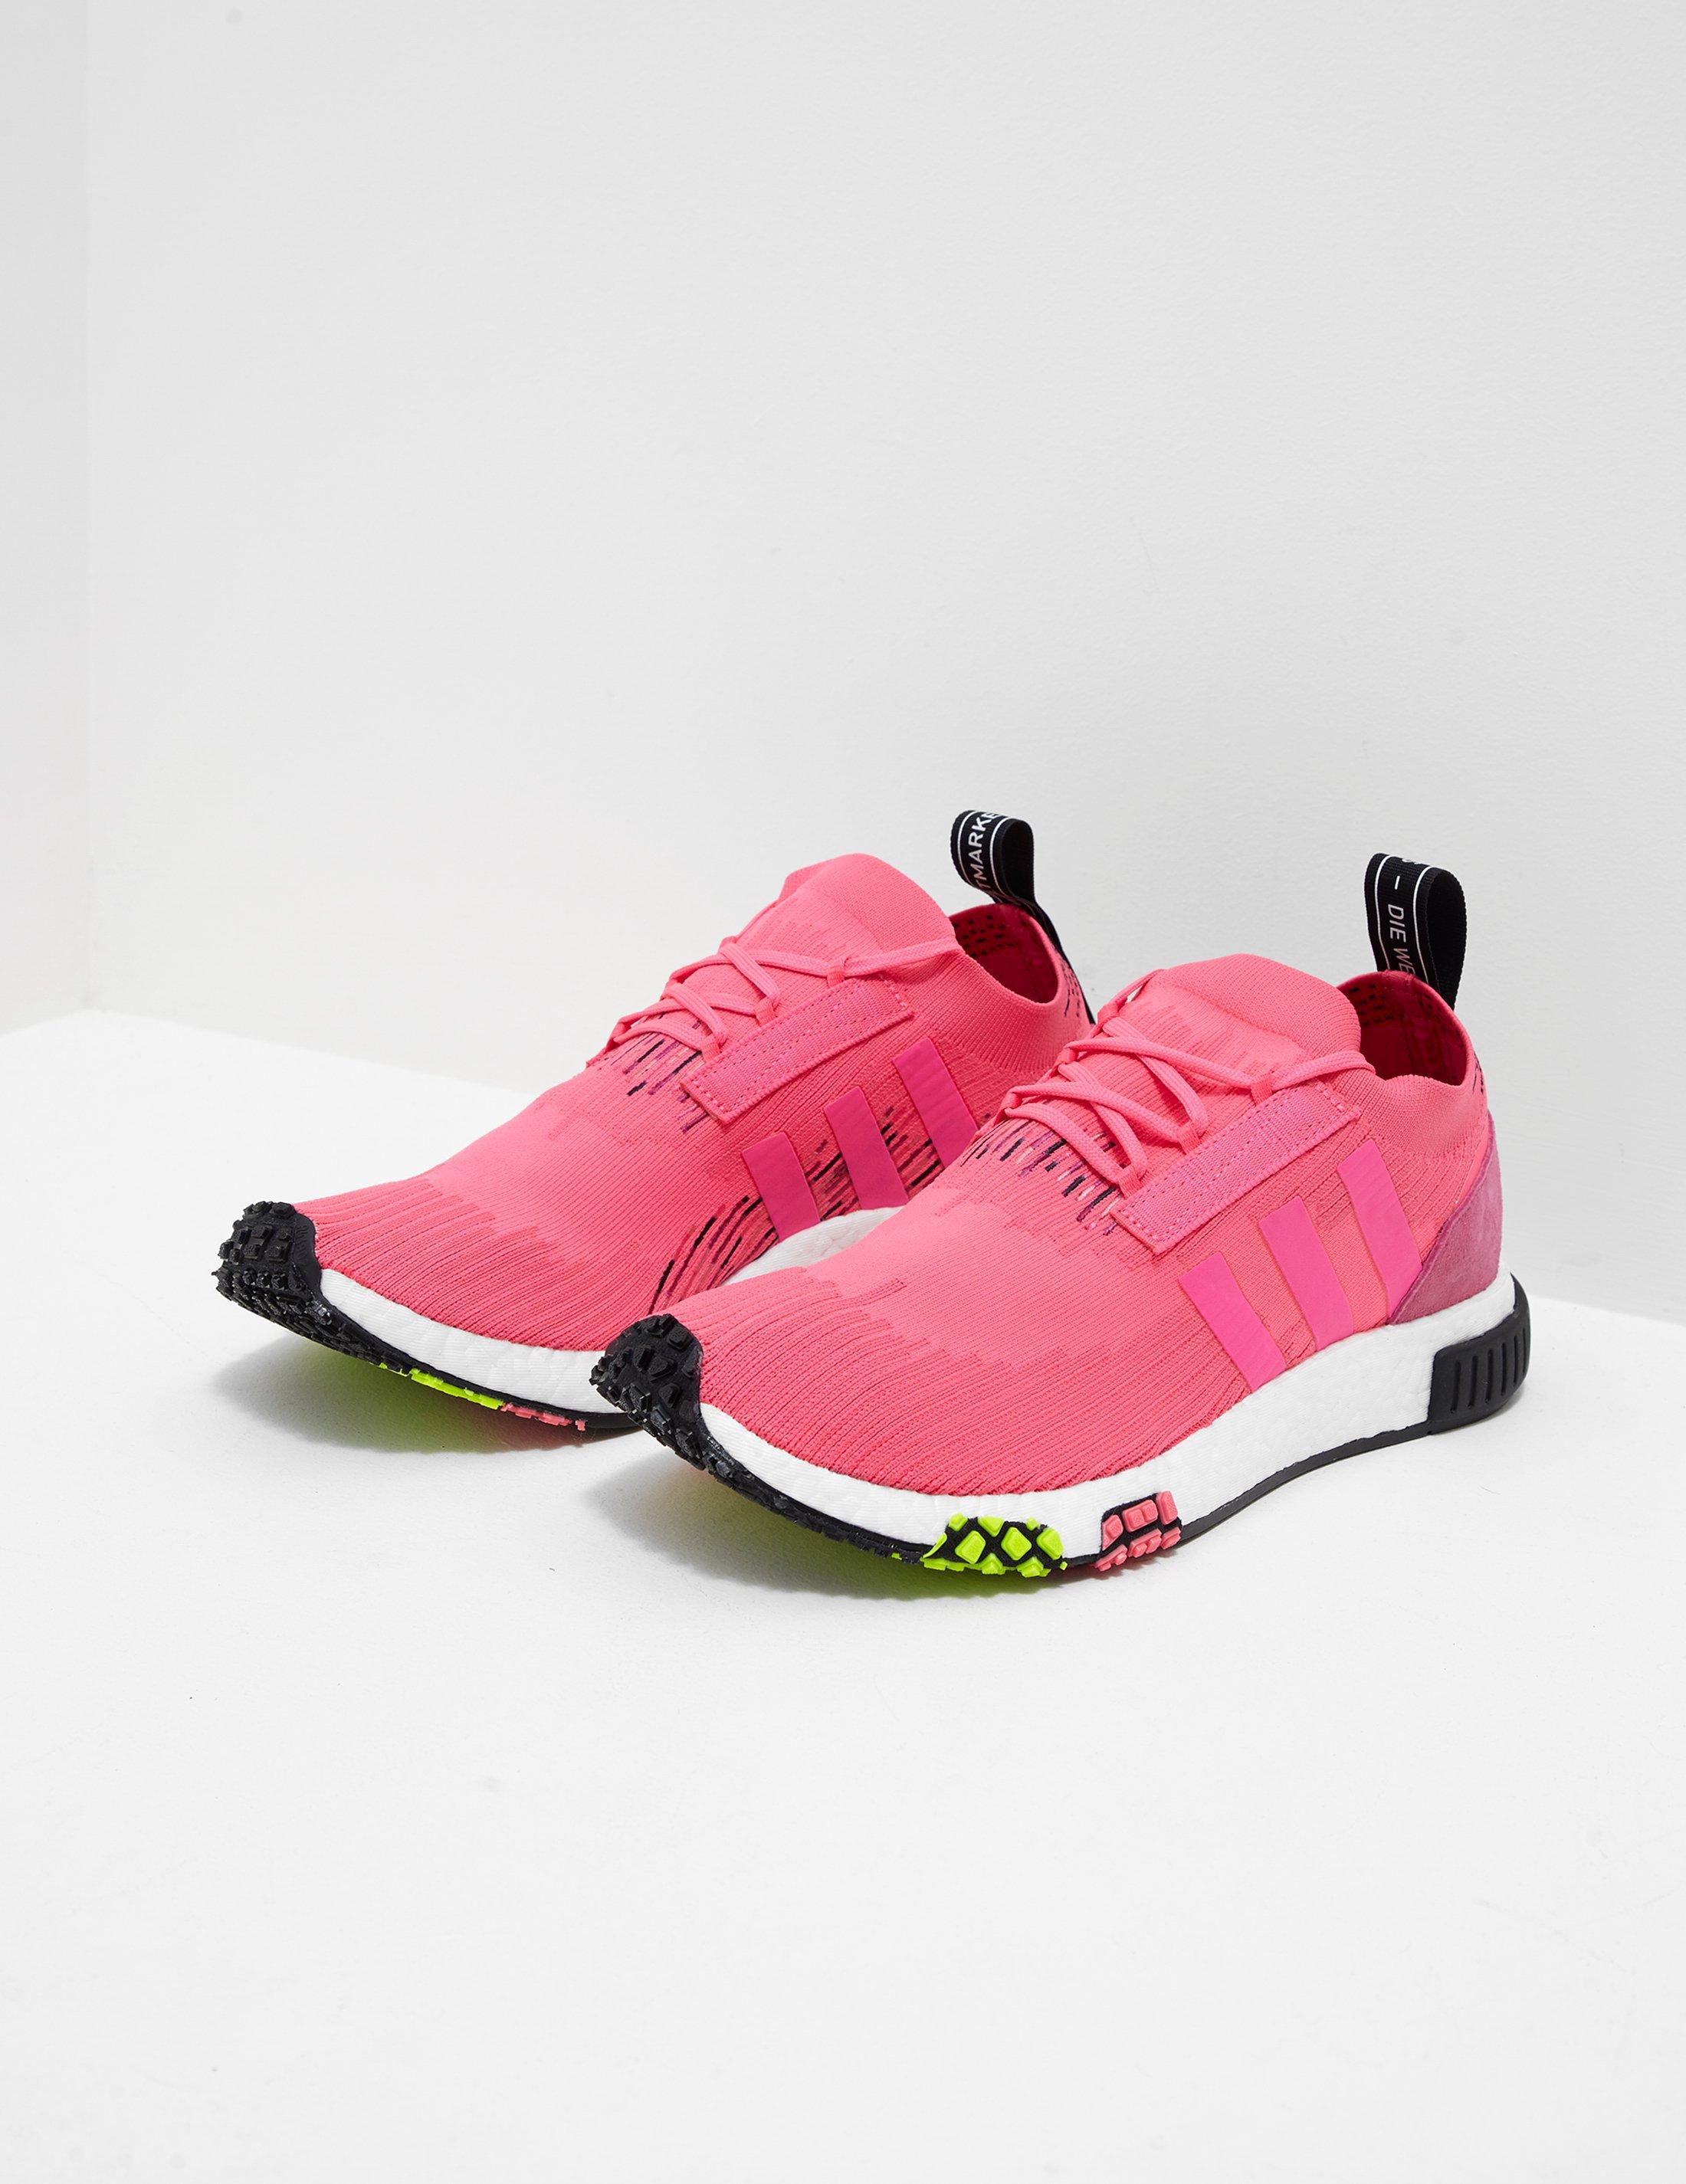 adidas nmd racer primeknit pink